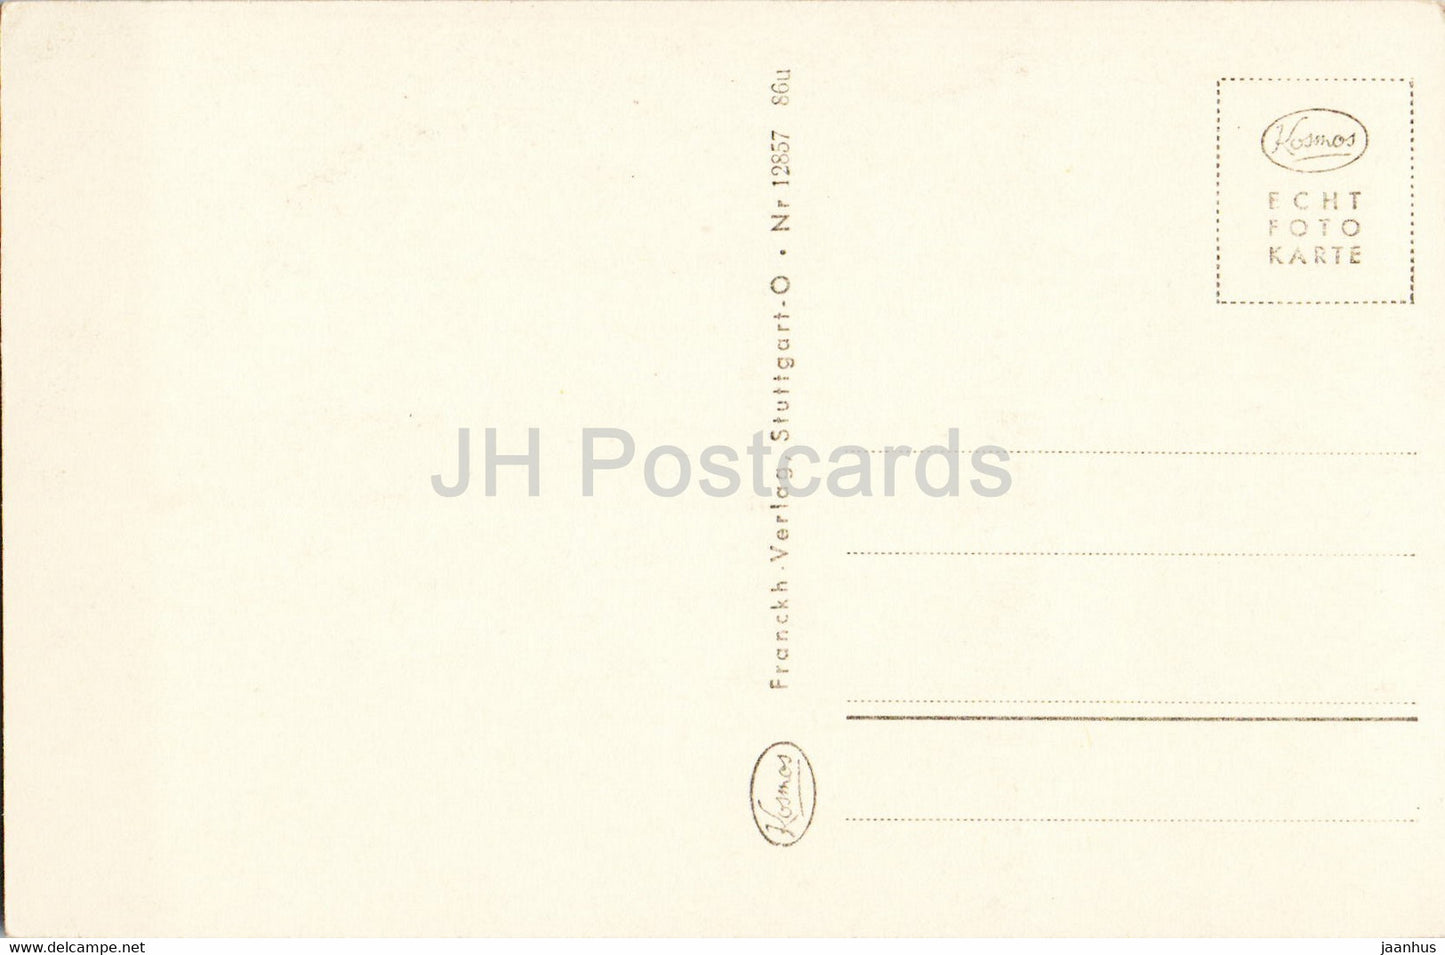 Am Bodensee - 12857 - old postcard - Germany - unused